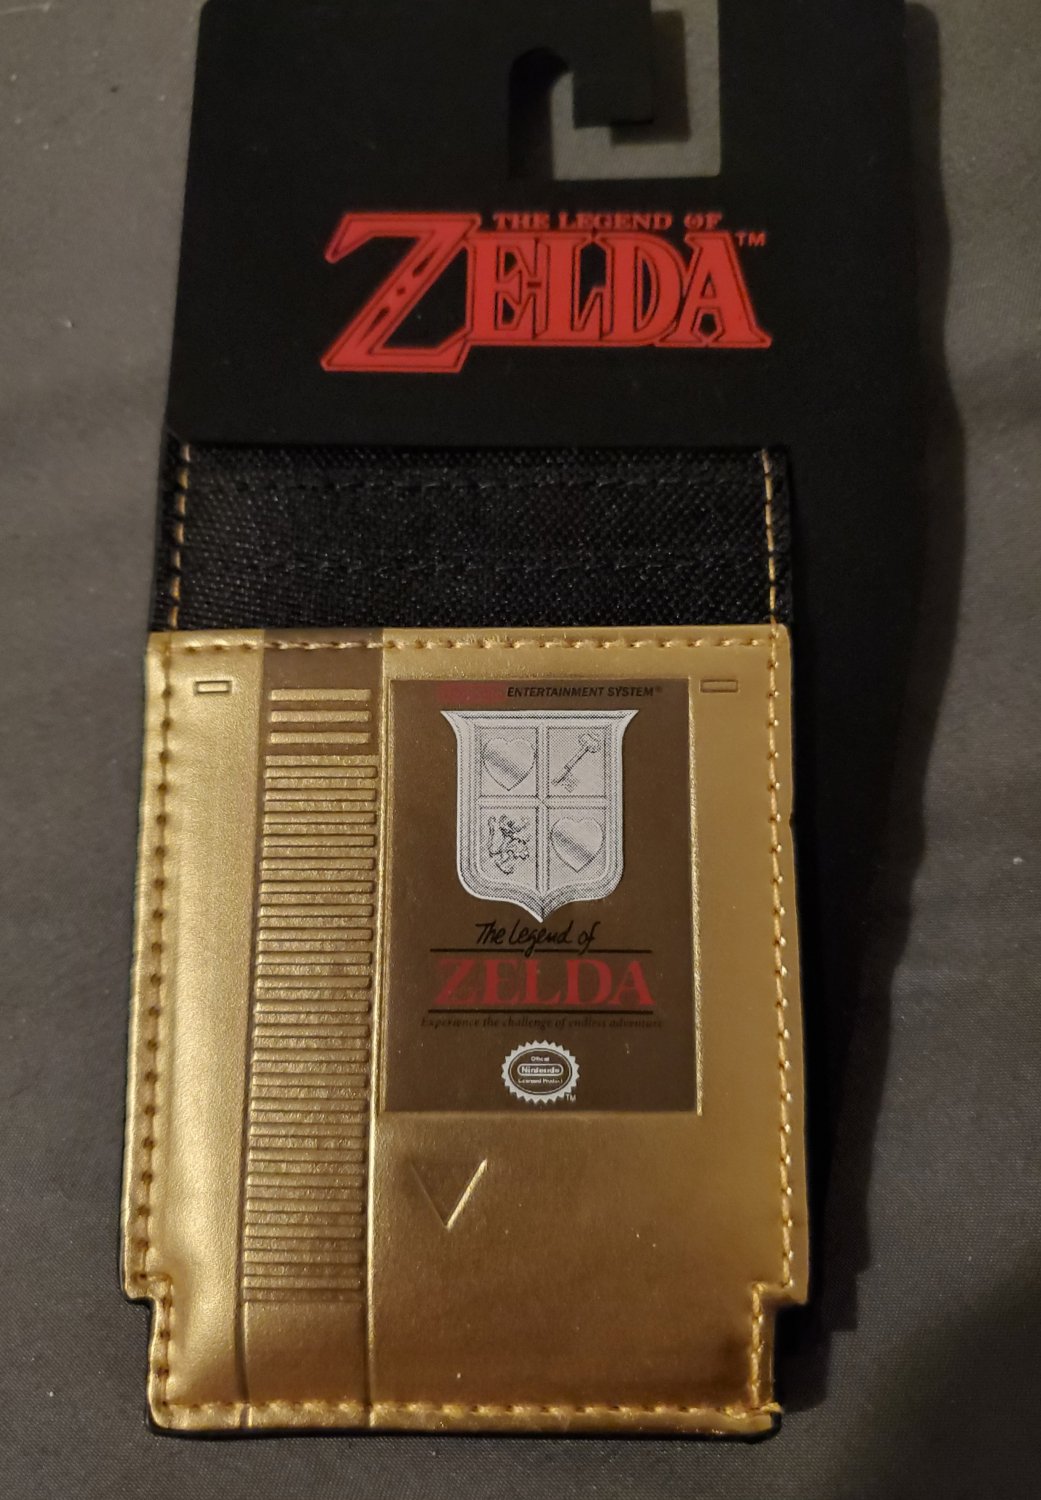 Rare zelda gold cartridge mini wallet ID holder official Nintendo